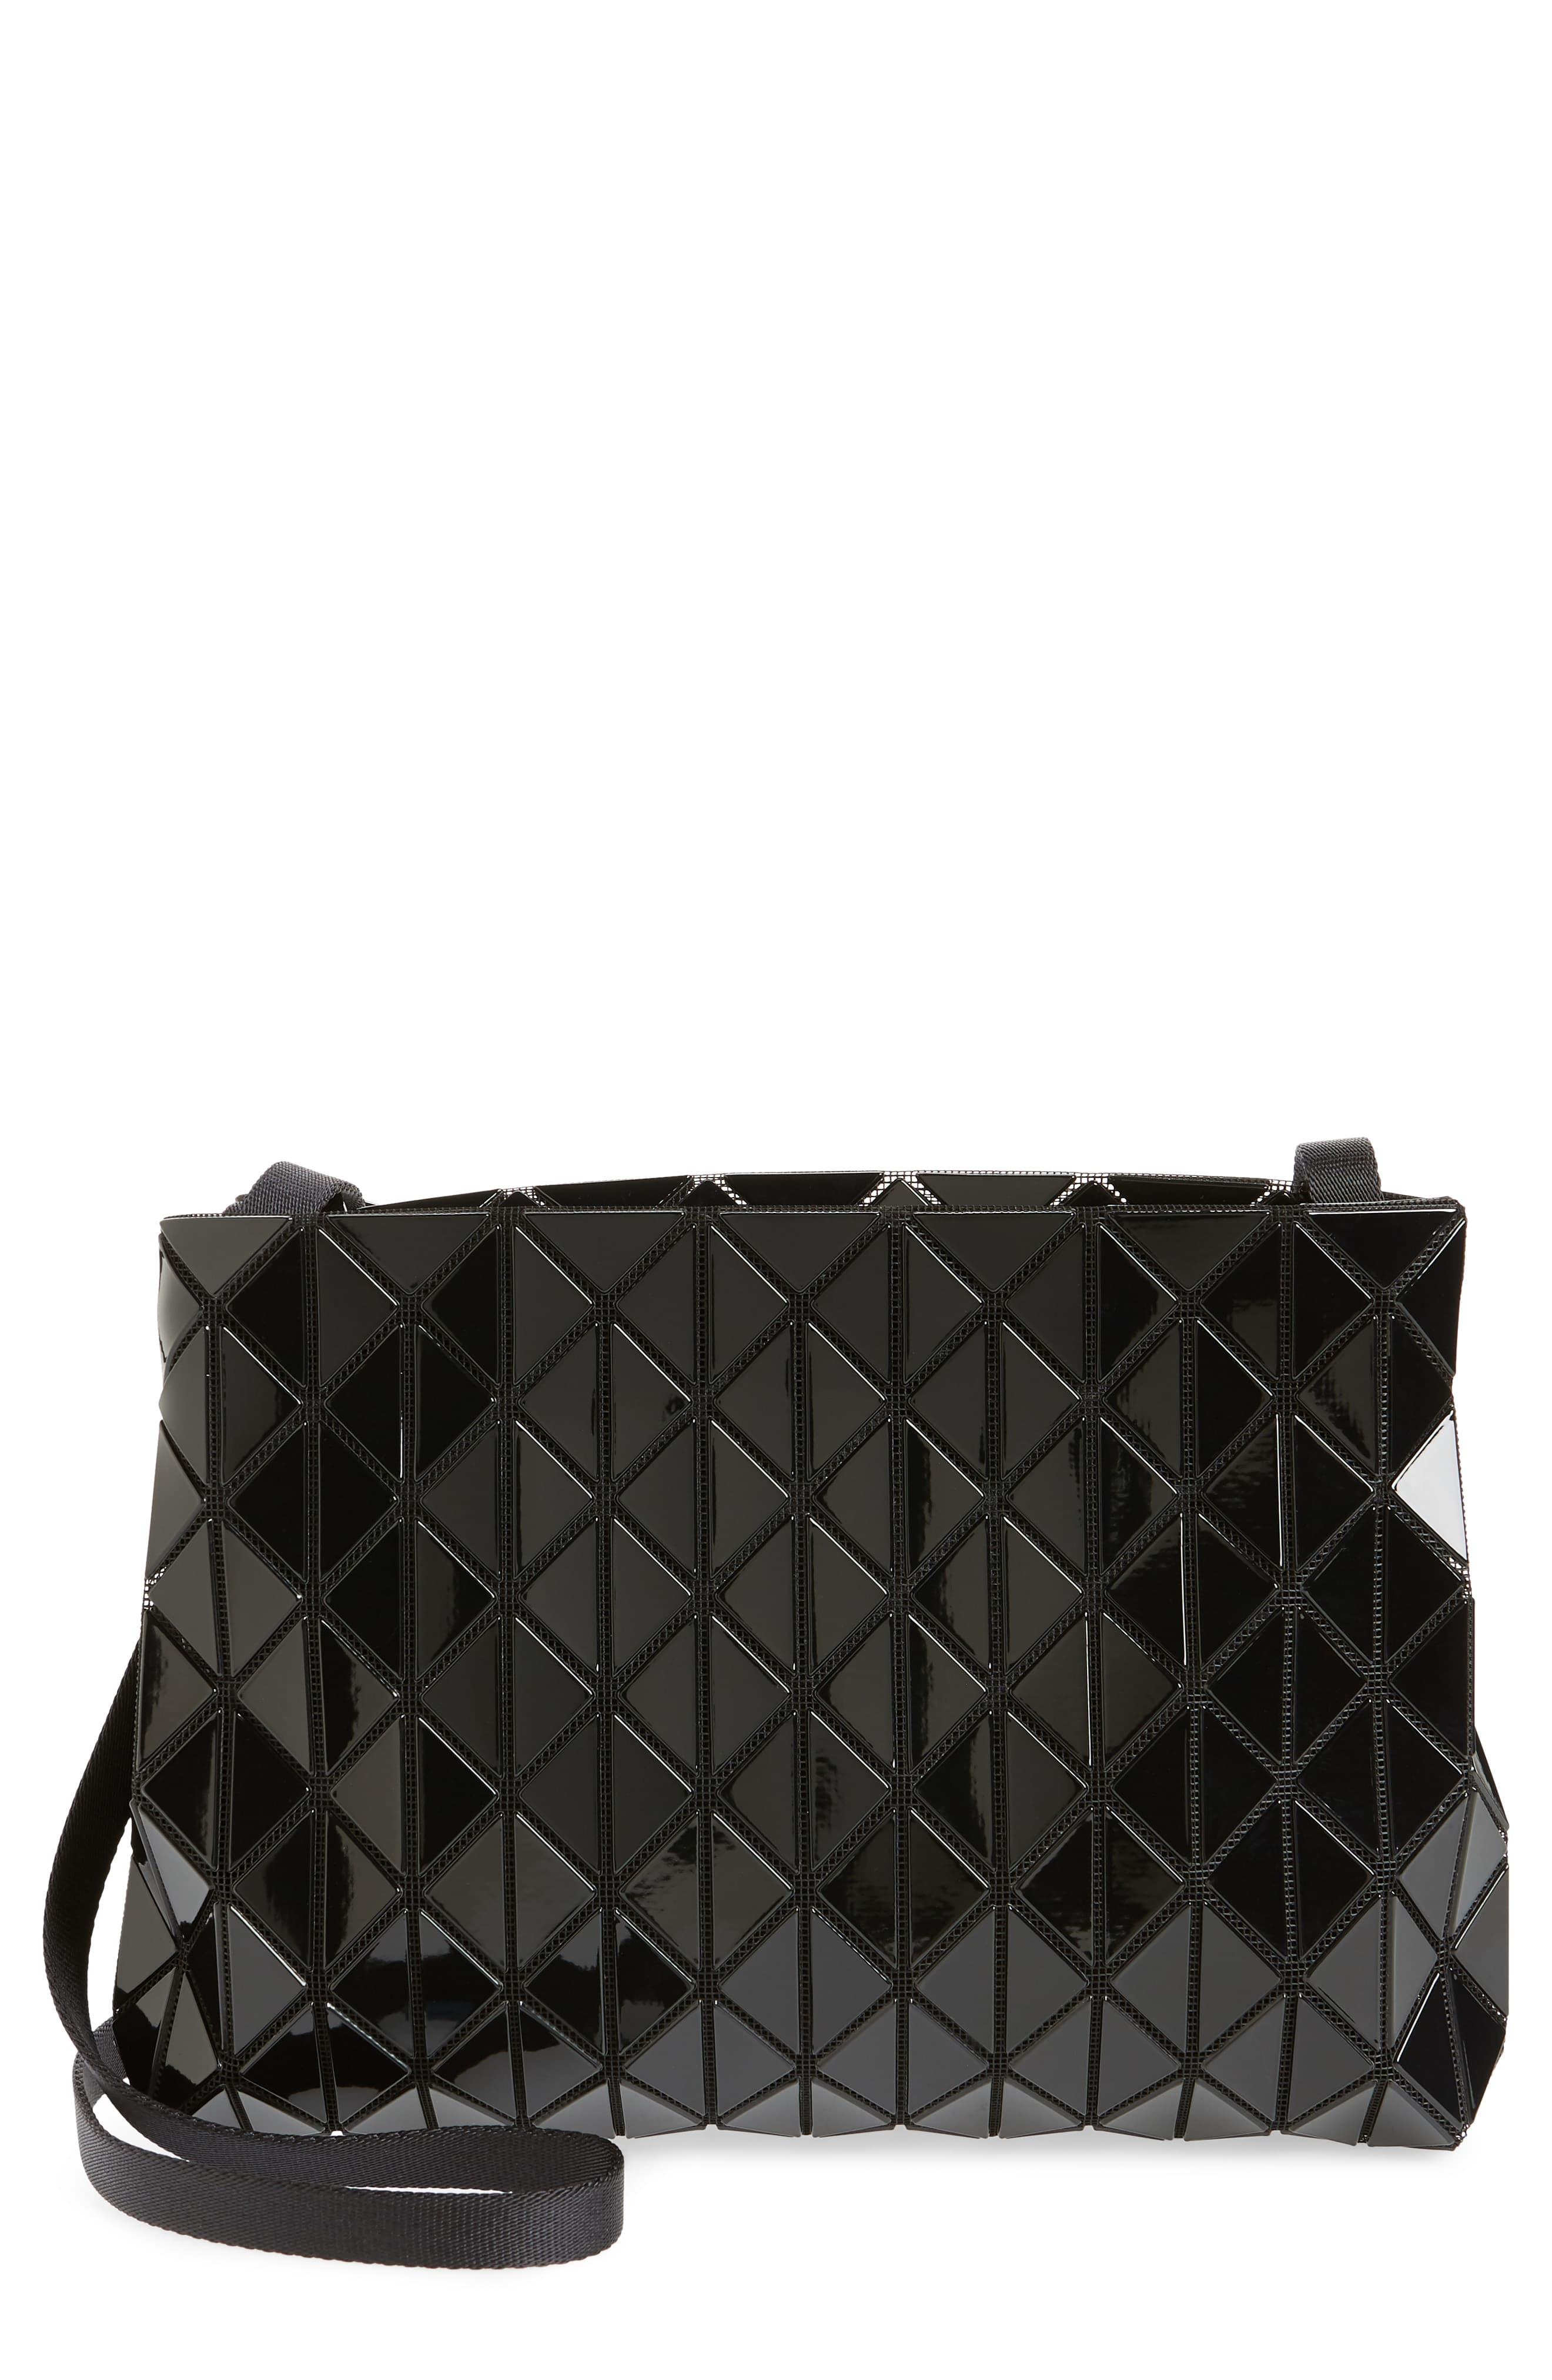 Bao Bao Issey Miyake Row Gloss Shoulder Bag in Black - Lyst